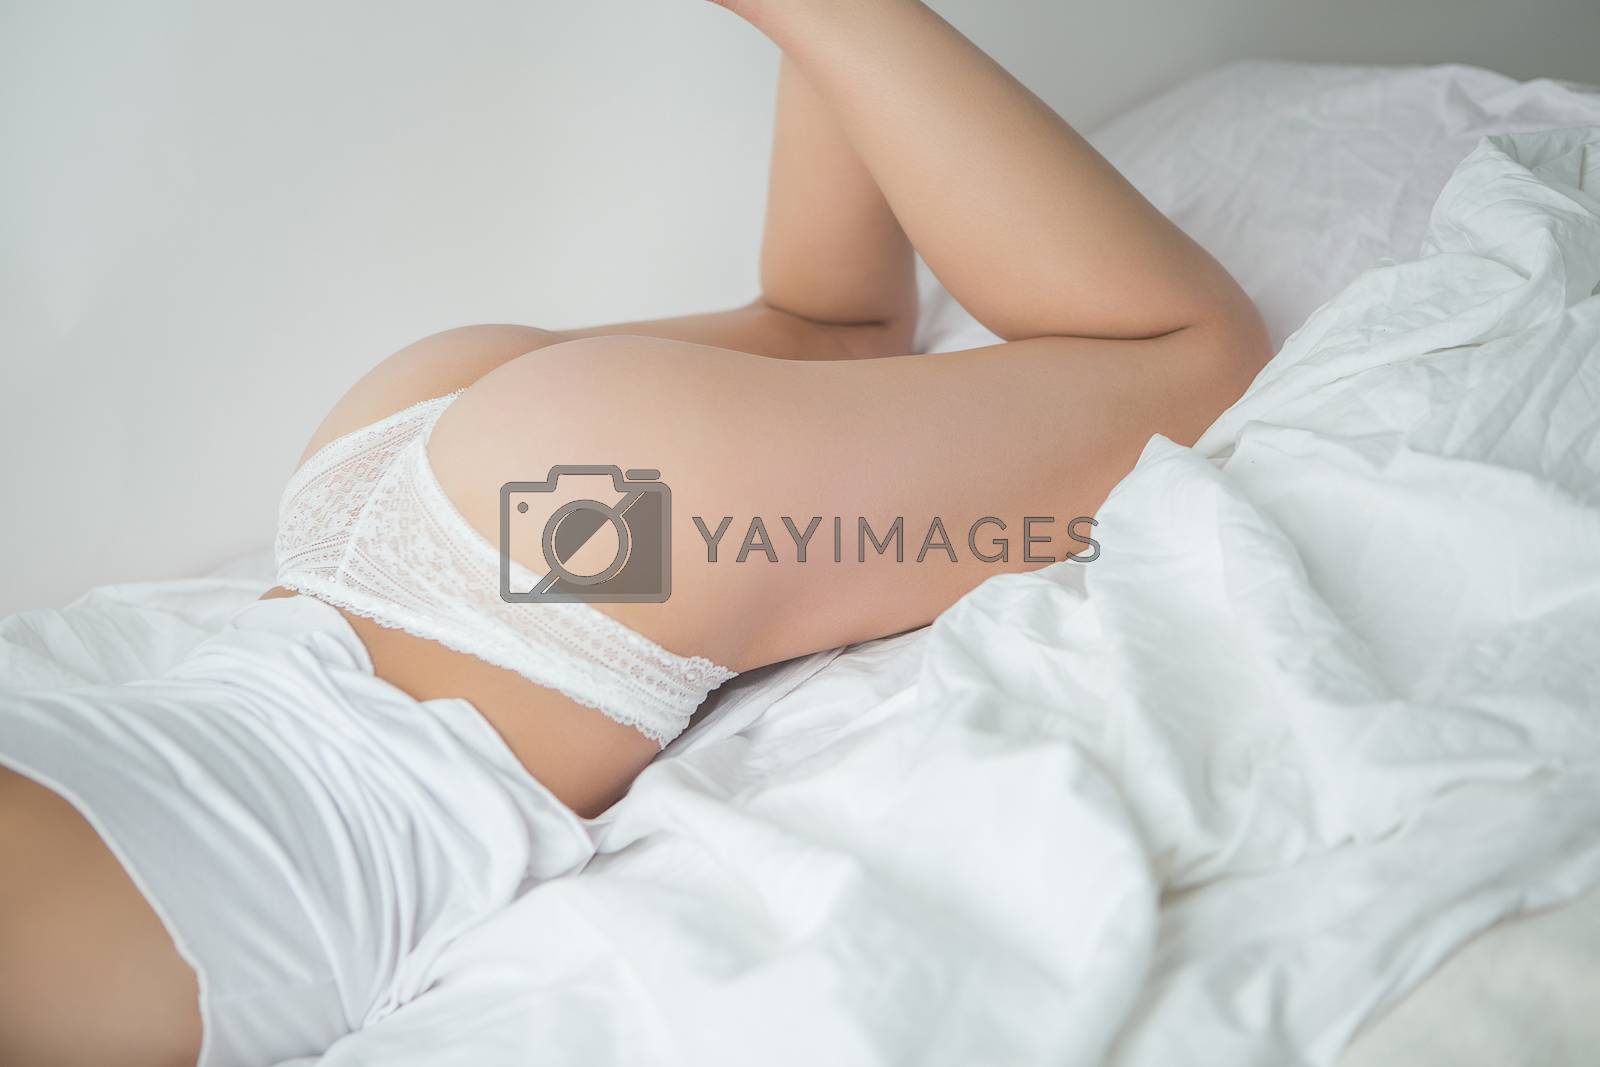 aragaki yui share sexy girl with nice ass photos